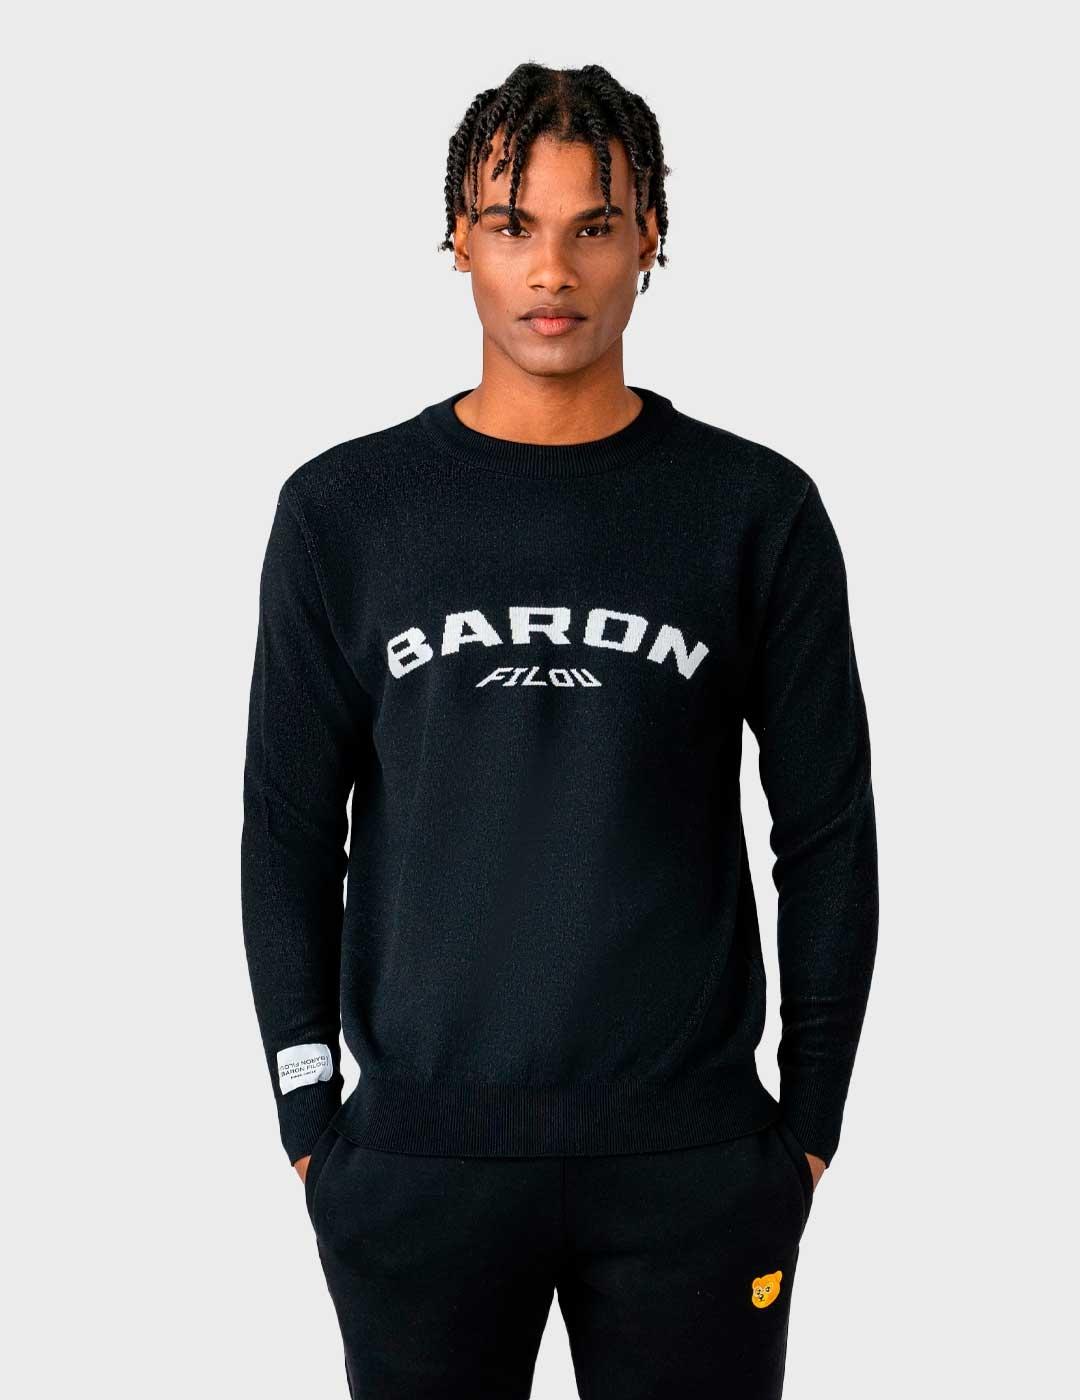 Jersey Baron Filou Knit Pullover negro unisex